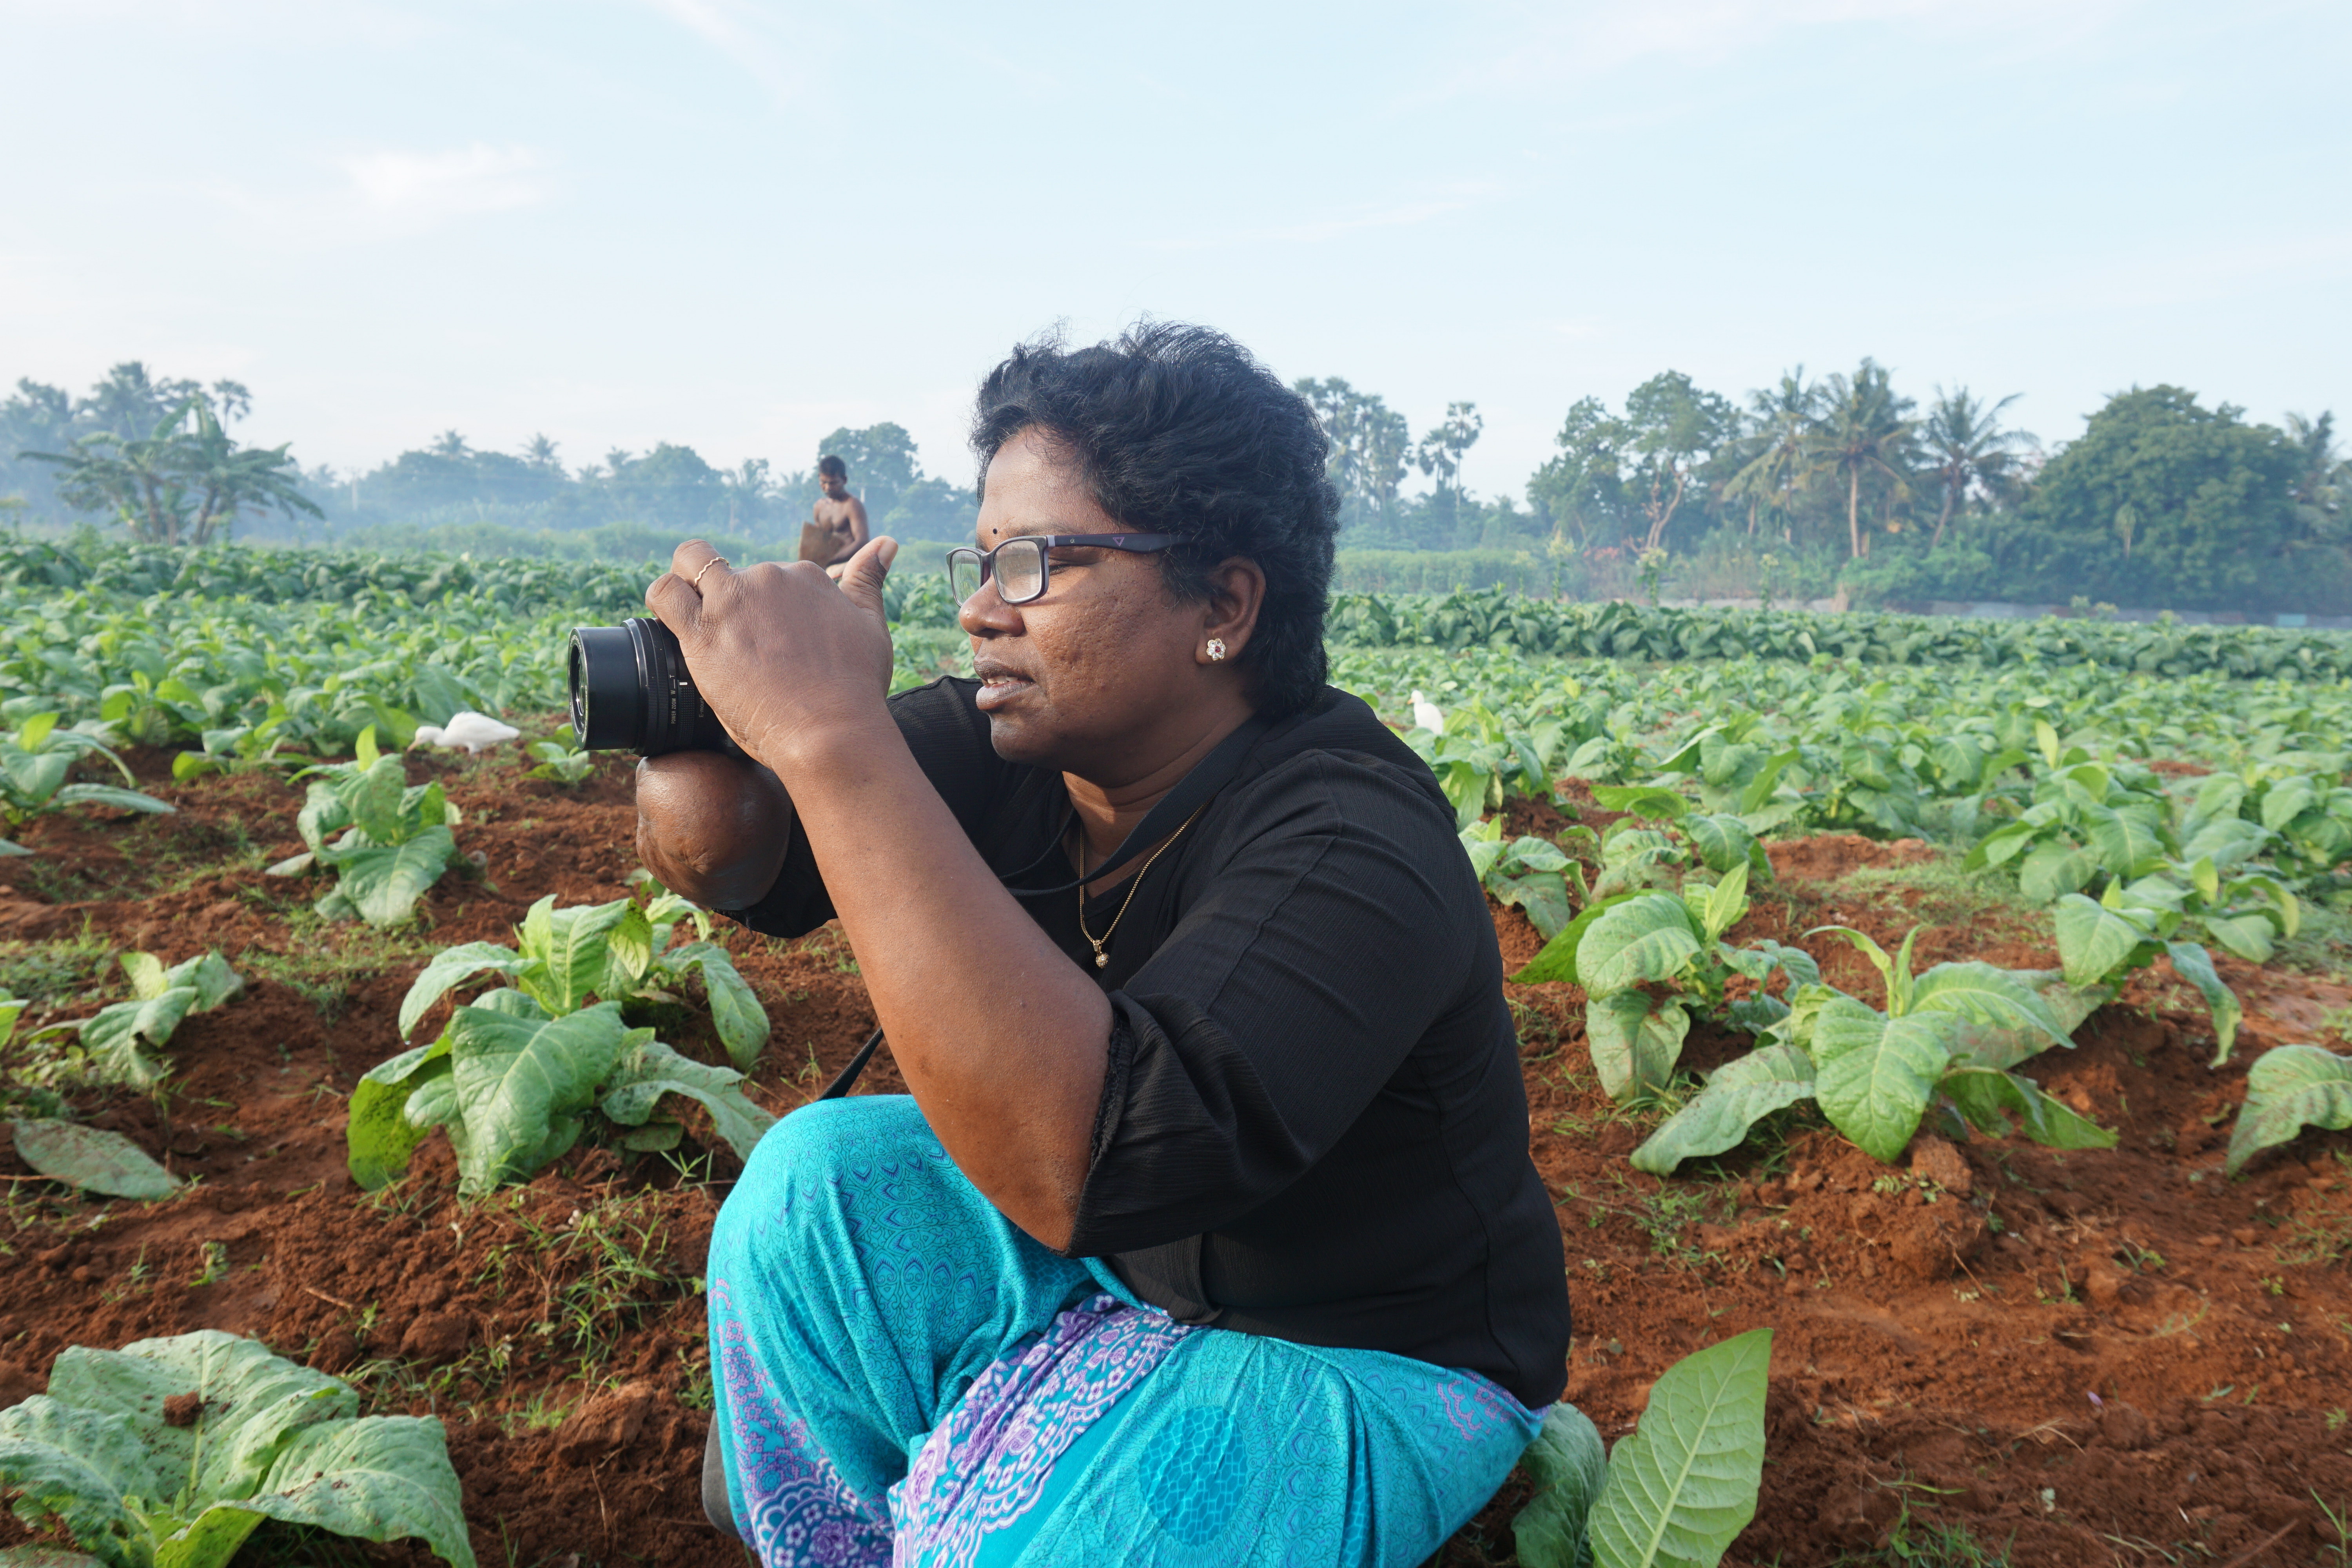 Woman in field of green crops taking a photo.